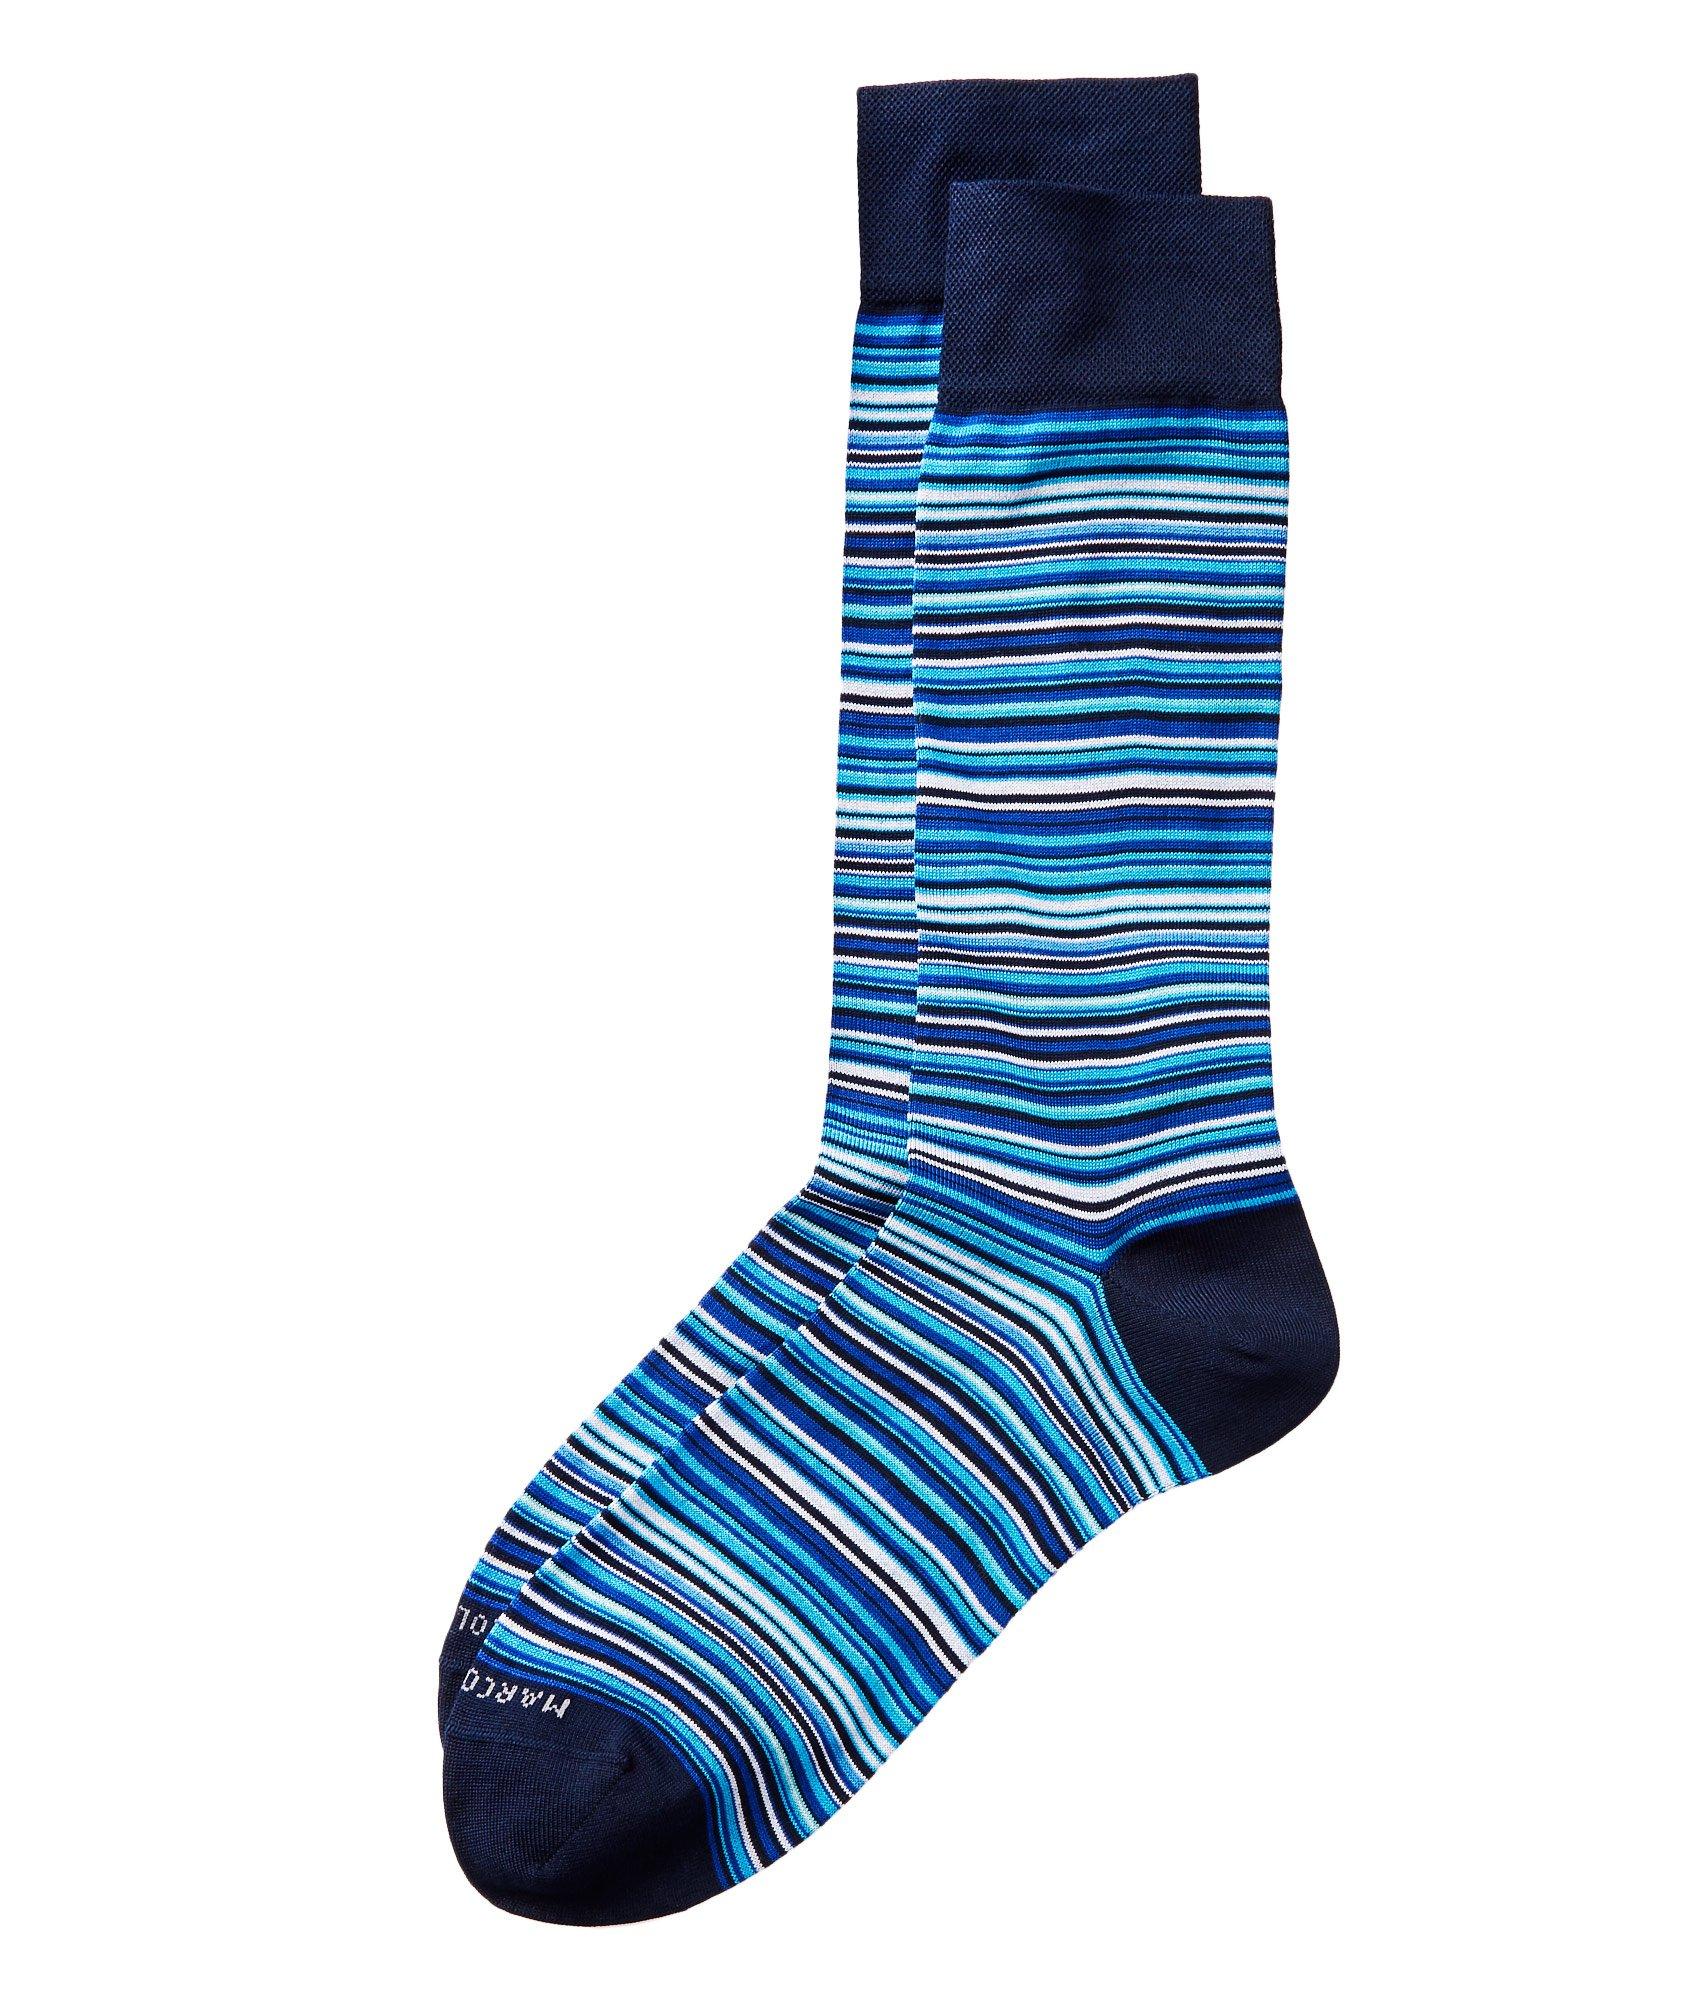 Prostate Cancer Canada Benefit Socks  image 0